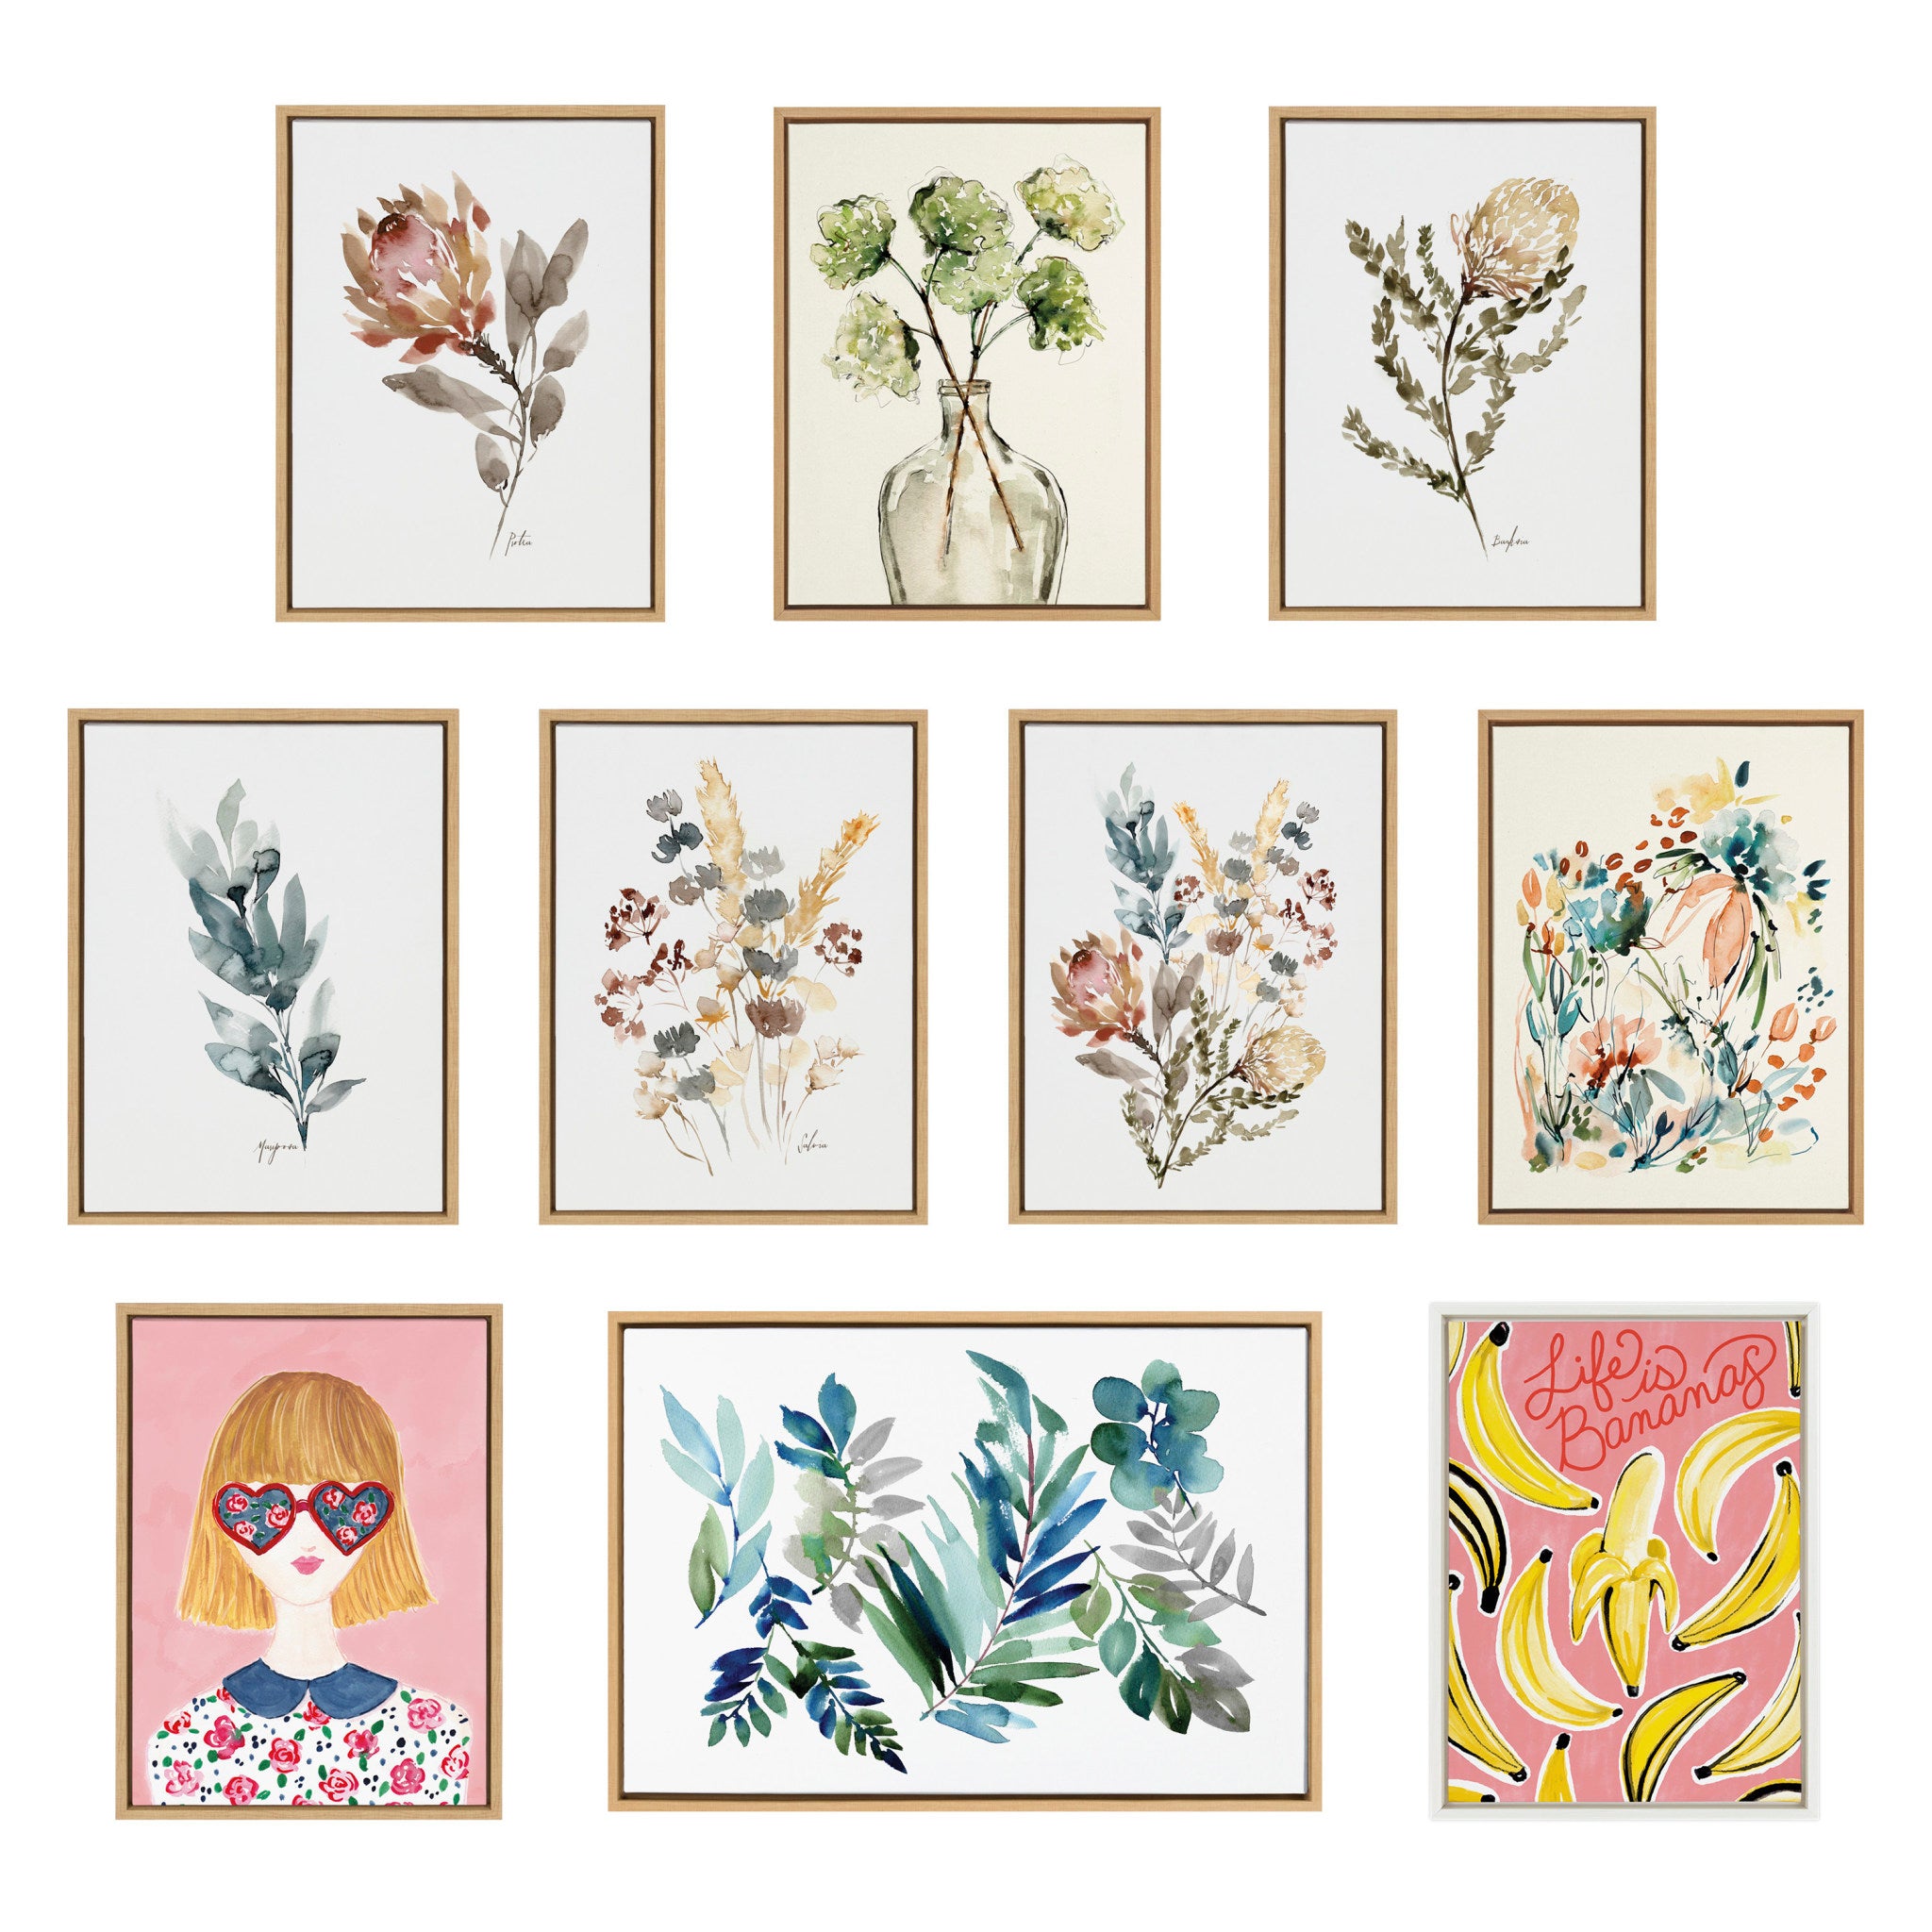 Sylvie Greenery Vase, Wild King Protea and Wild Banksia Framed Canvas Art Set by Sara Berrenson